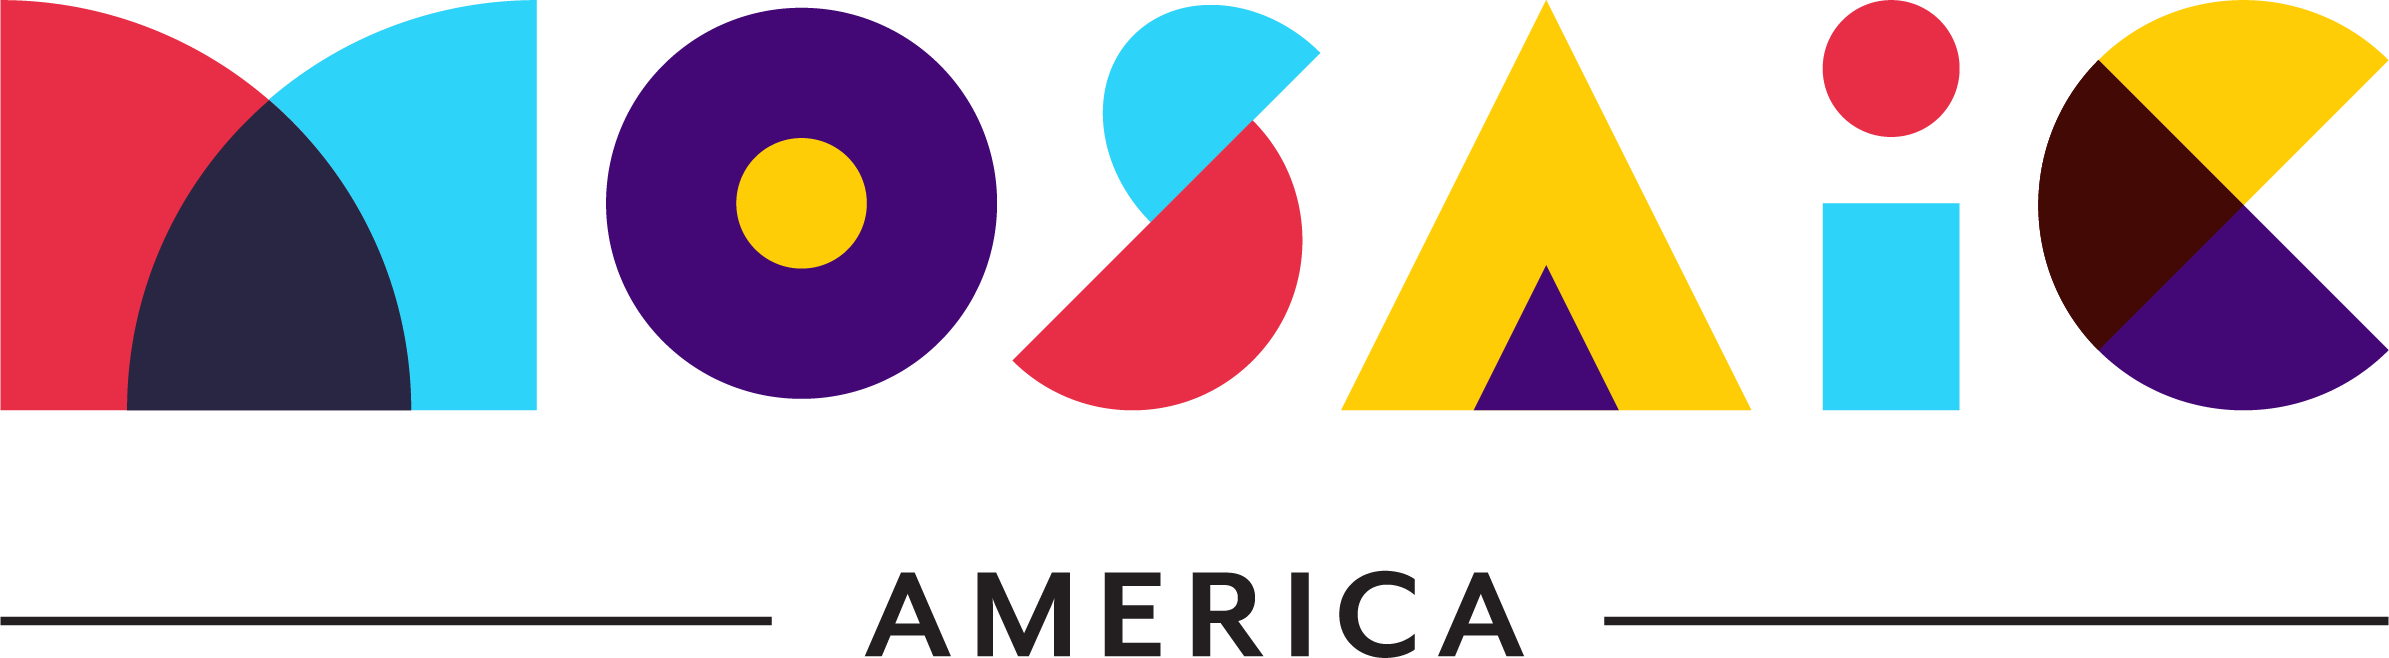 mosaic america logo